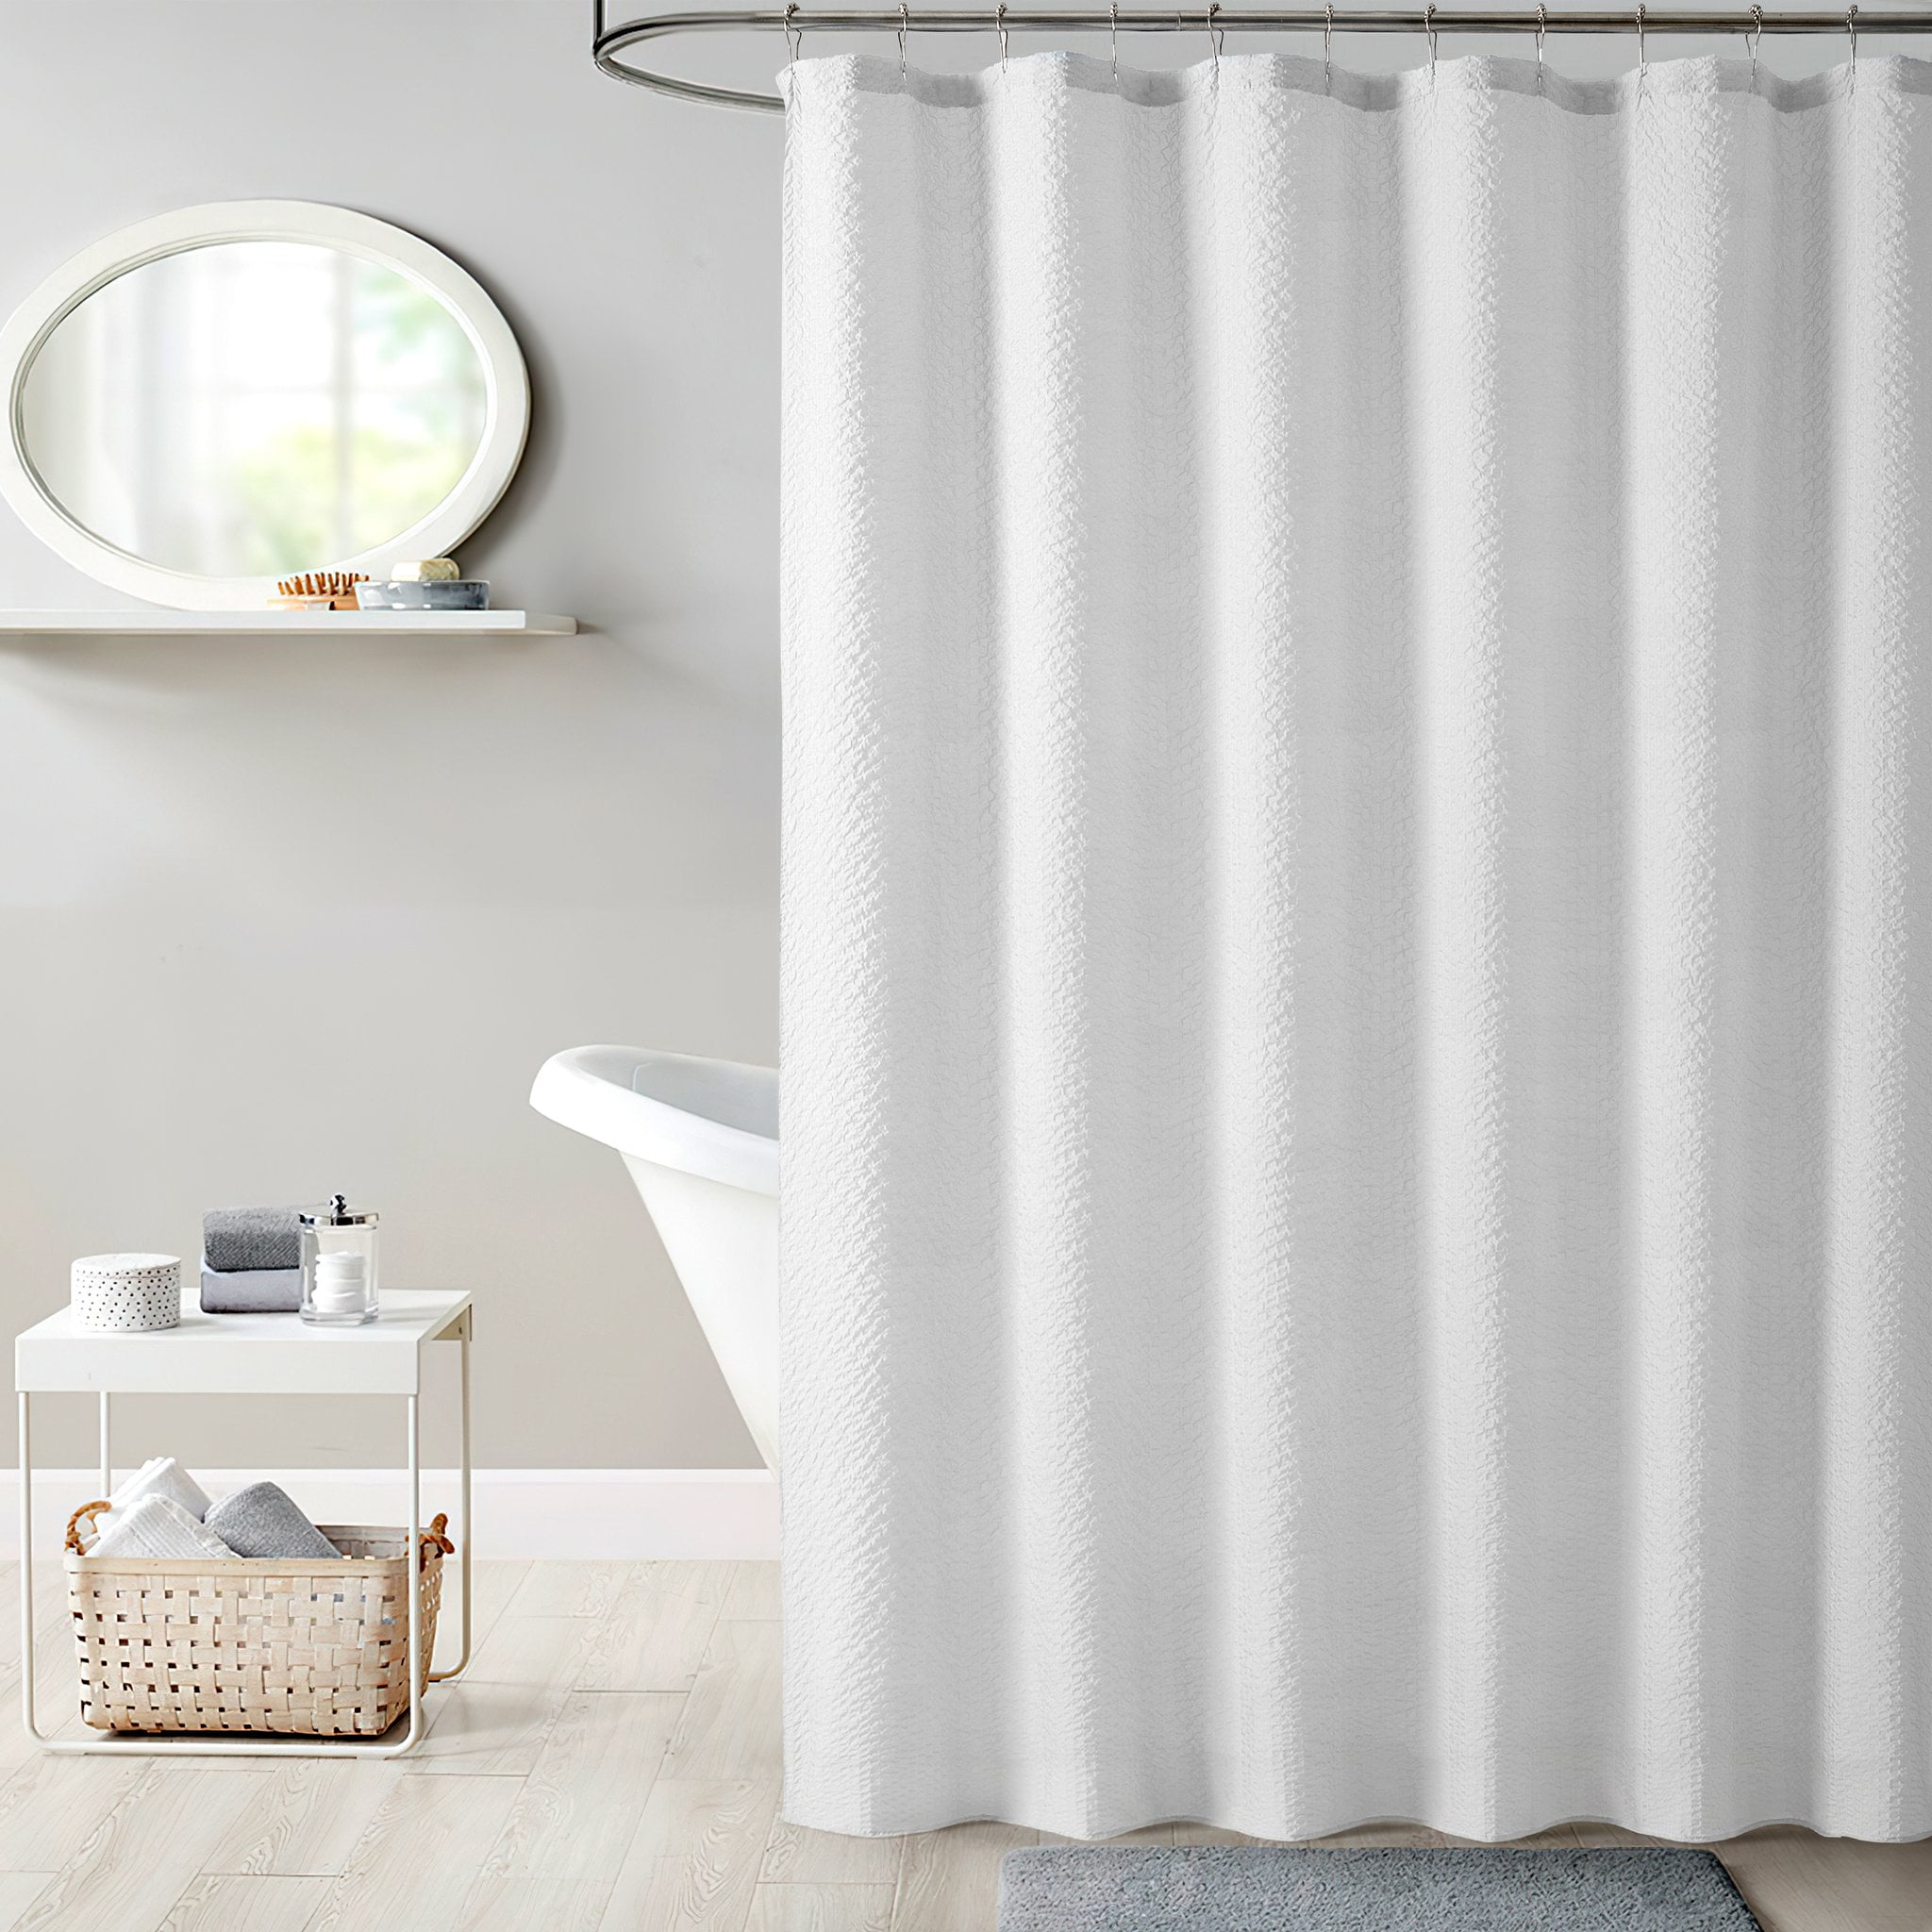 x 72 in 70 in White or Cream Curtain Satin Stripe Hotel Fabric Shower Curtain 